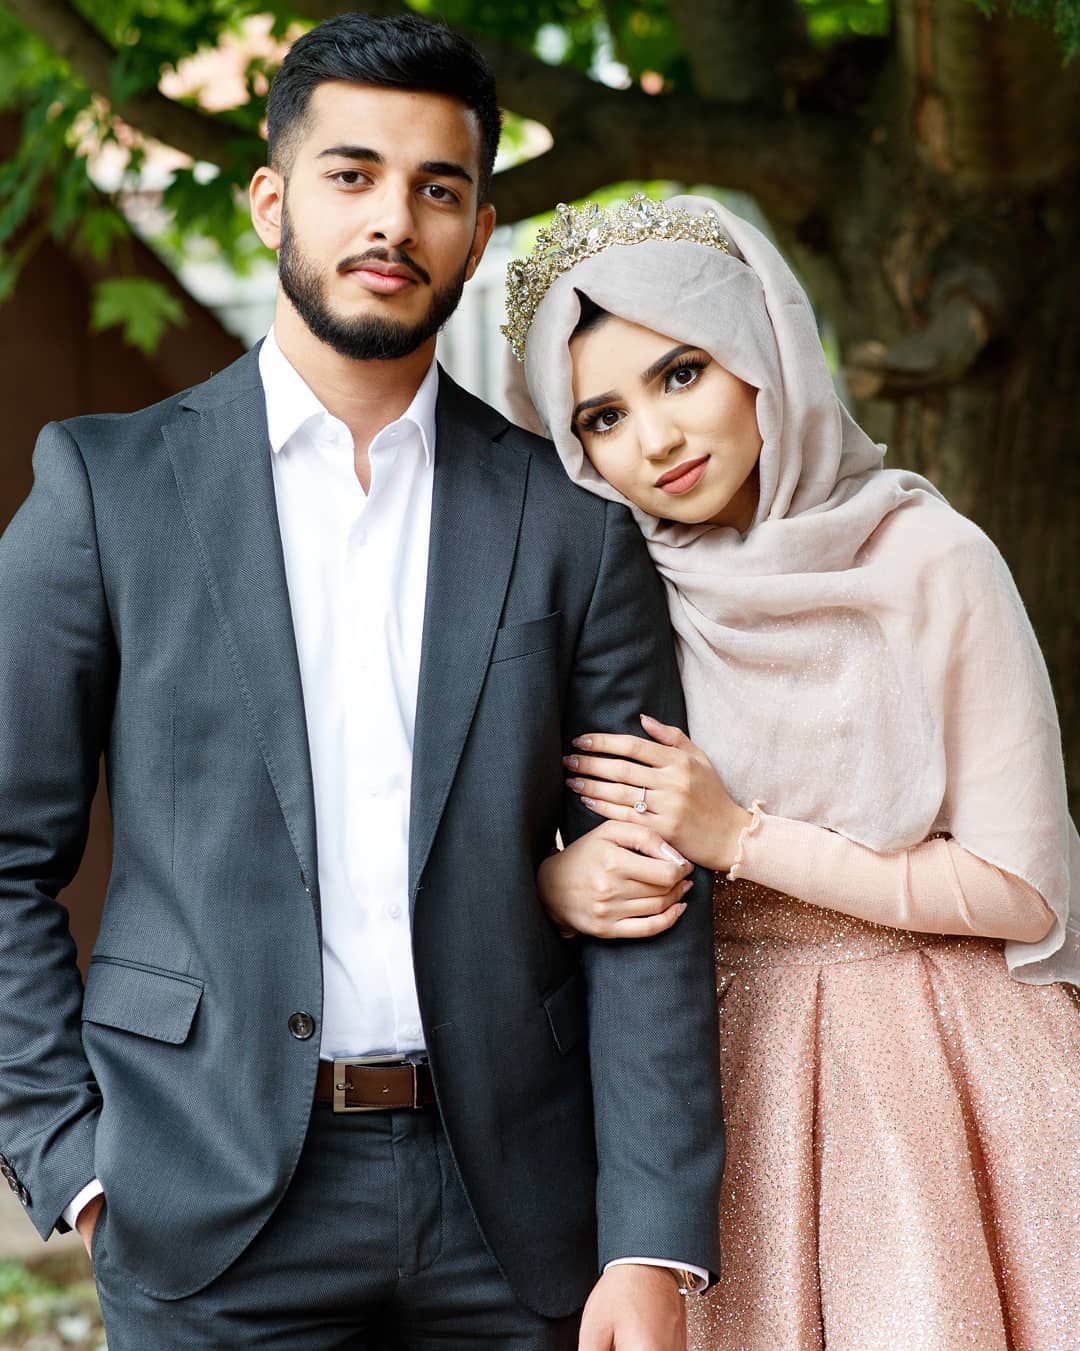 Muslim Couple | Muslim Romantic Couple | Islamic | Muslim